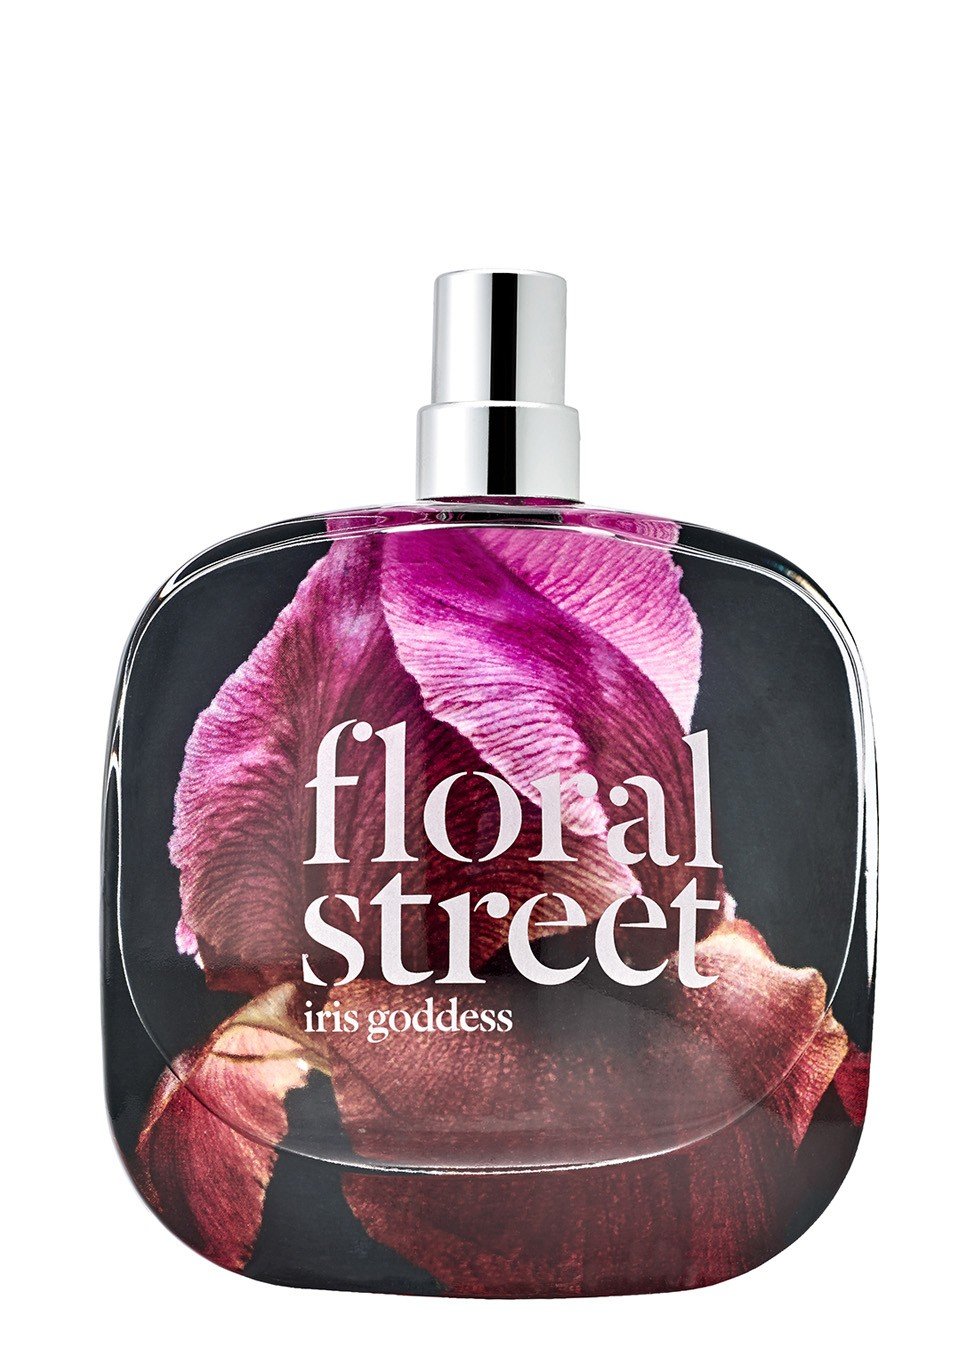 Iris Goddess Floral Street perfume - a new fragrance for women and men 2017